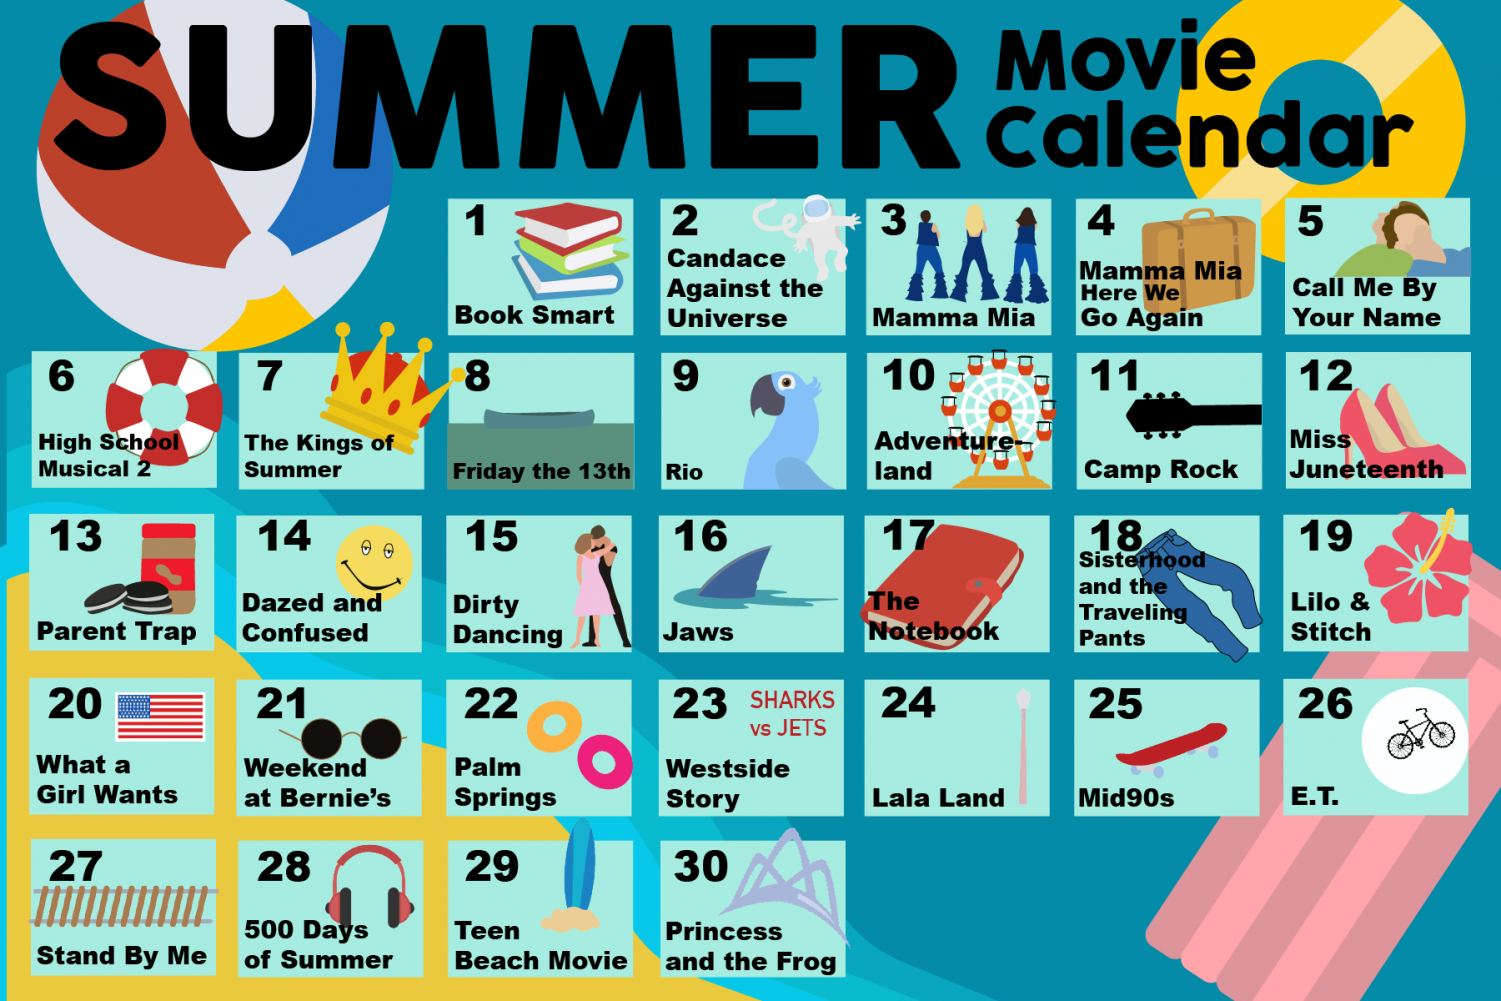 Summer movie calendar Manual RedEye